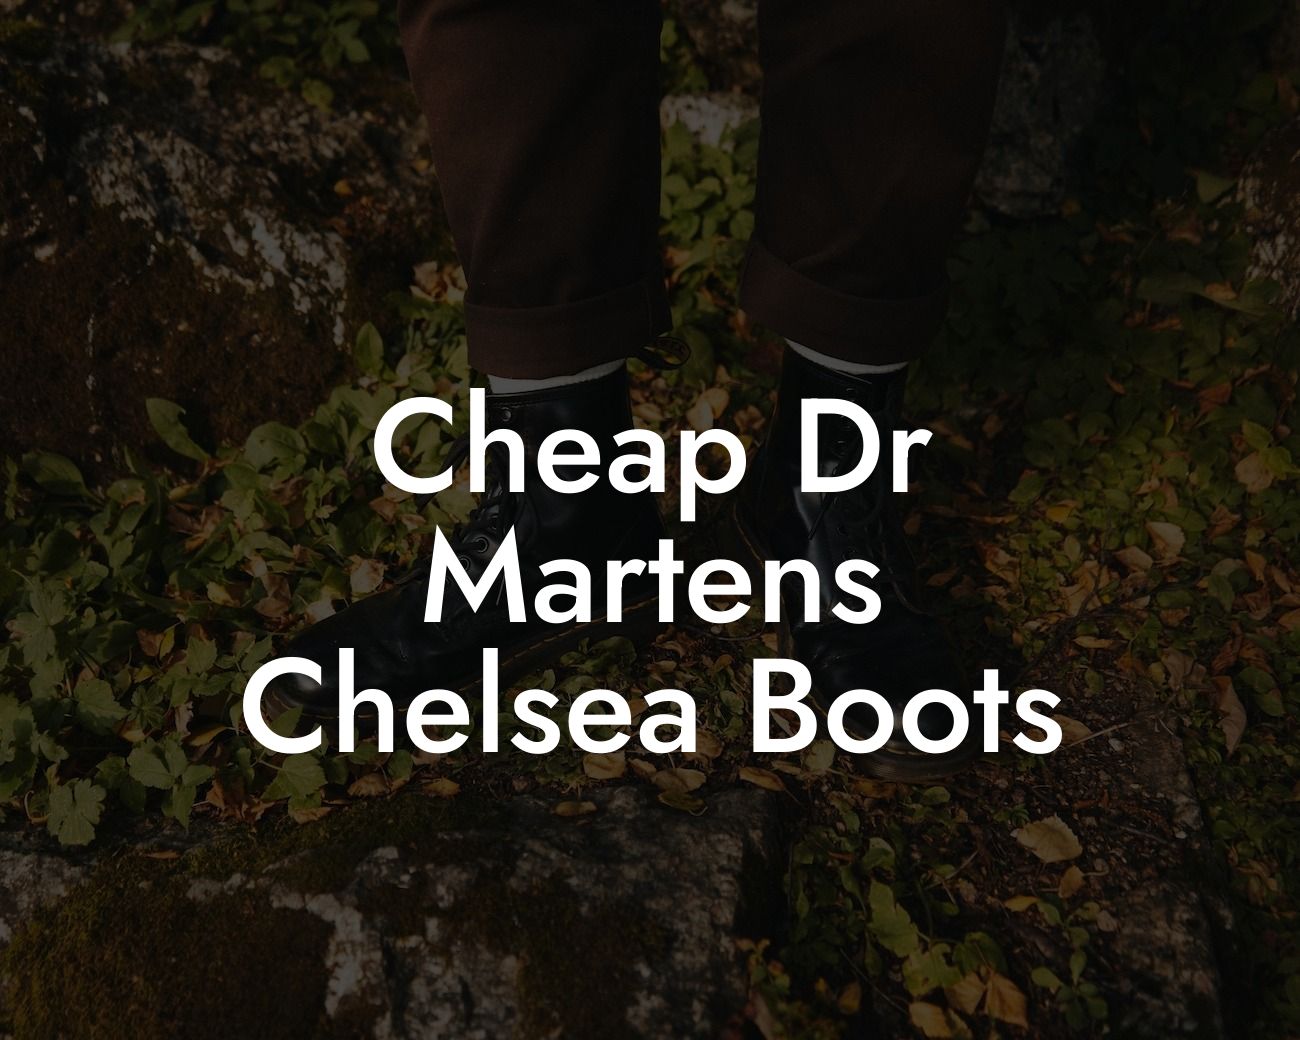 Cheap Dr Martens Chelsea Boots